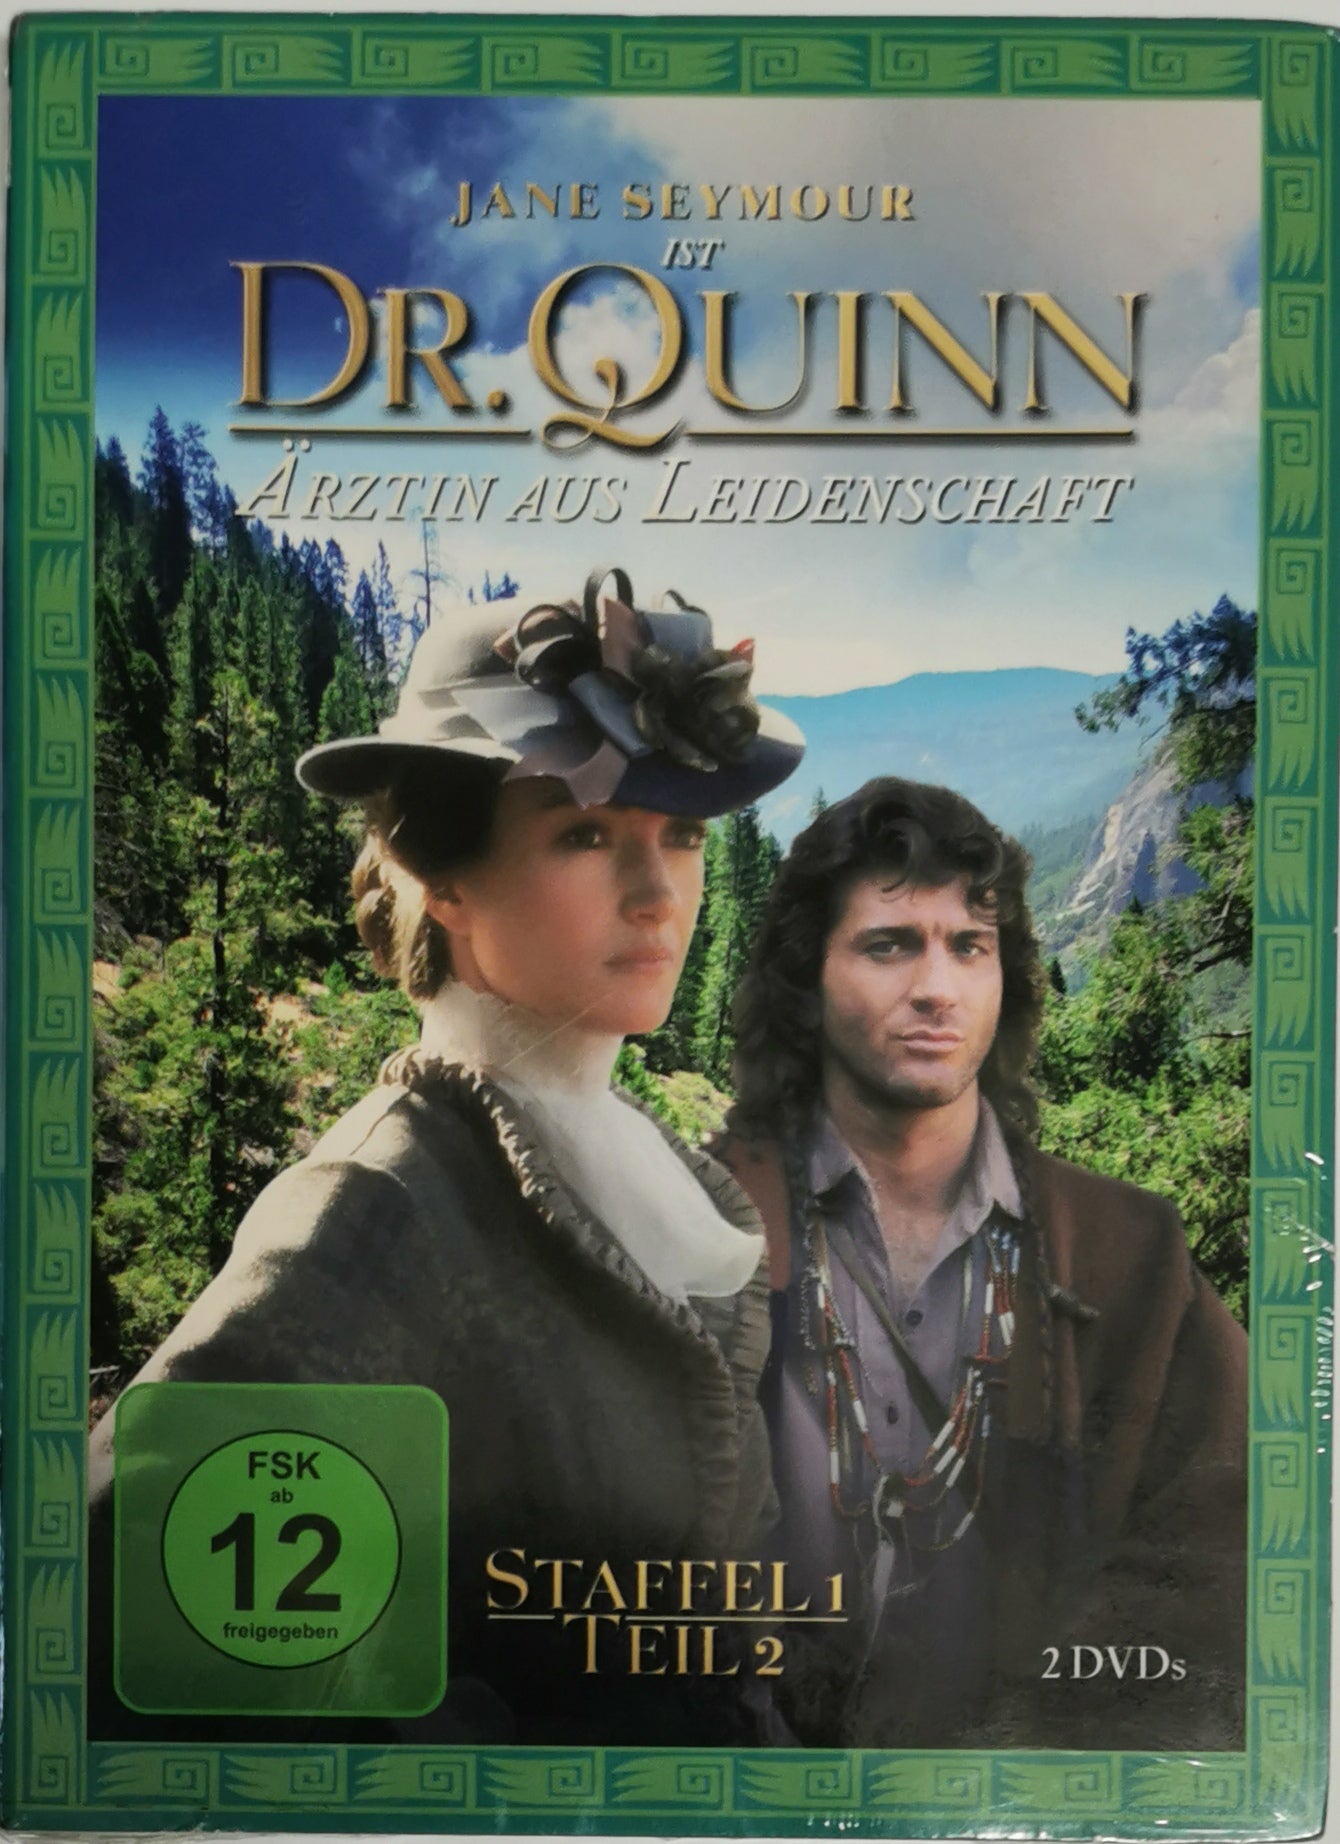 Dr Quinn Staffel 1 Teil 2 (DVD) [Neu]